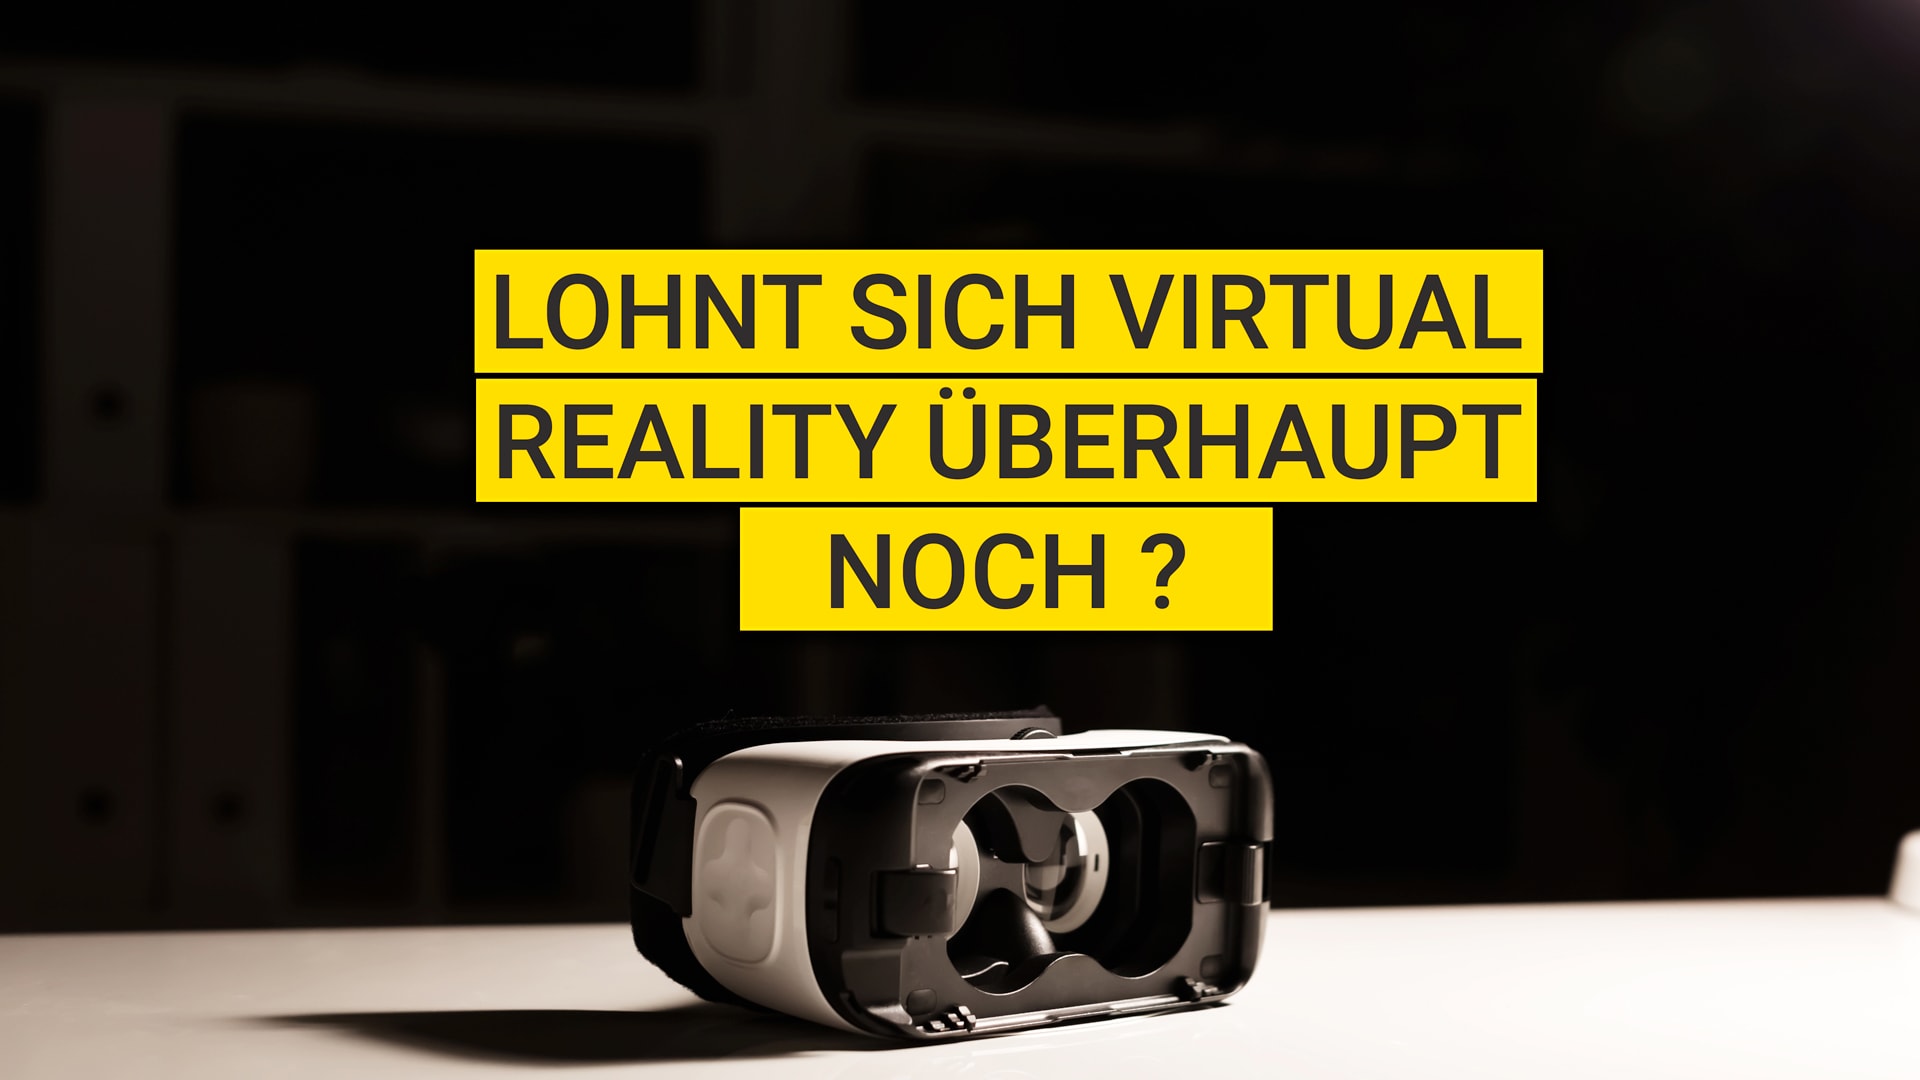 Lohnt-sich-virtual-reality-überhaupt-noch